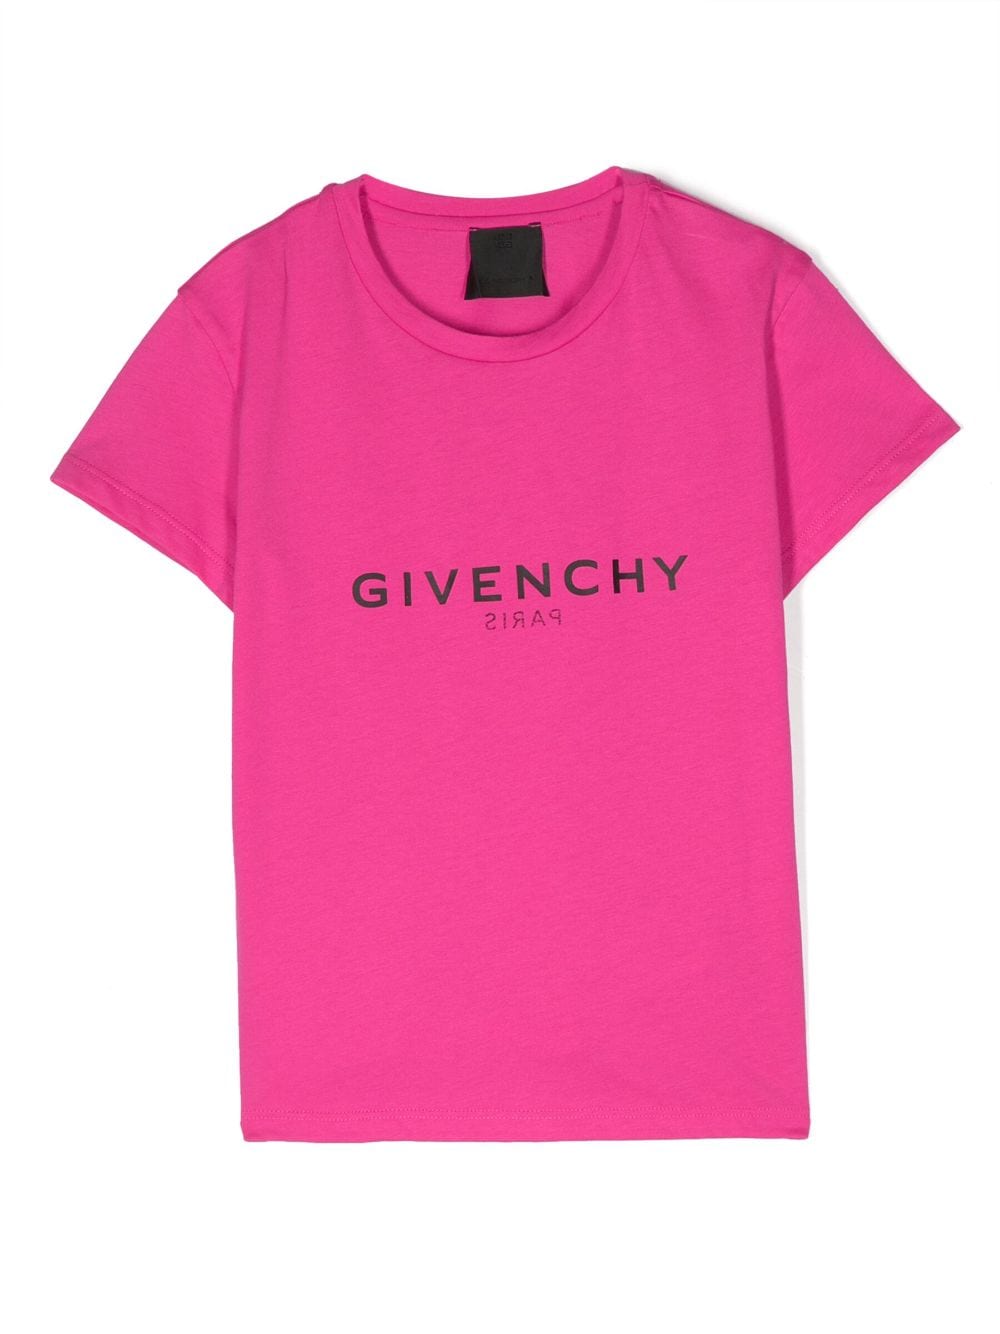 Fuchsia cotton jersey girl GIVENCHY t-shirt | Carofiglio Junior